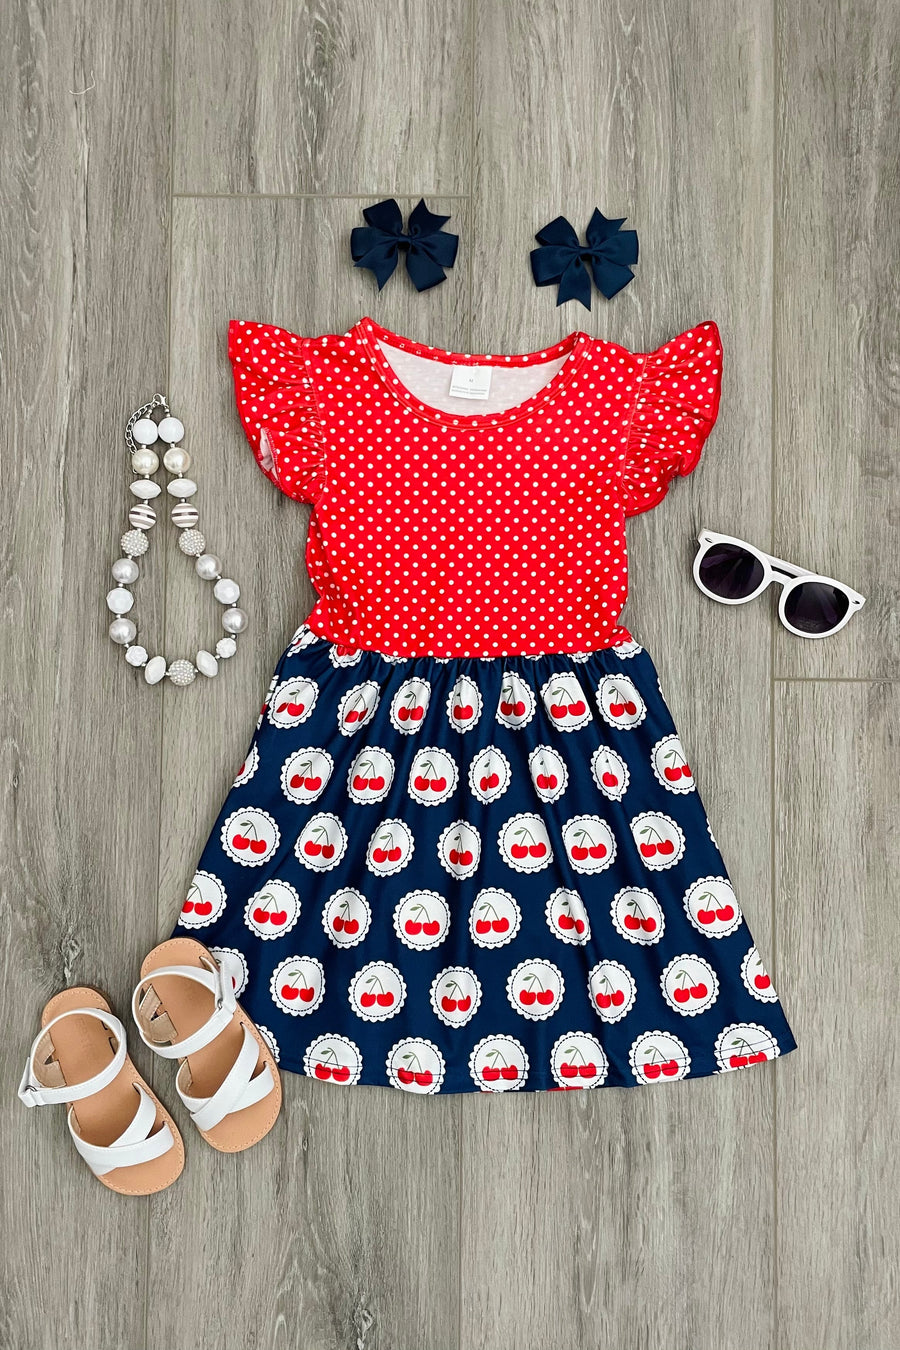 Navy/Red Polka Dot Cherry Dress - Rylee Faith Designs